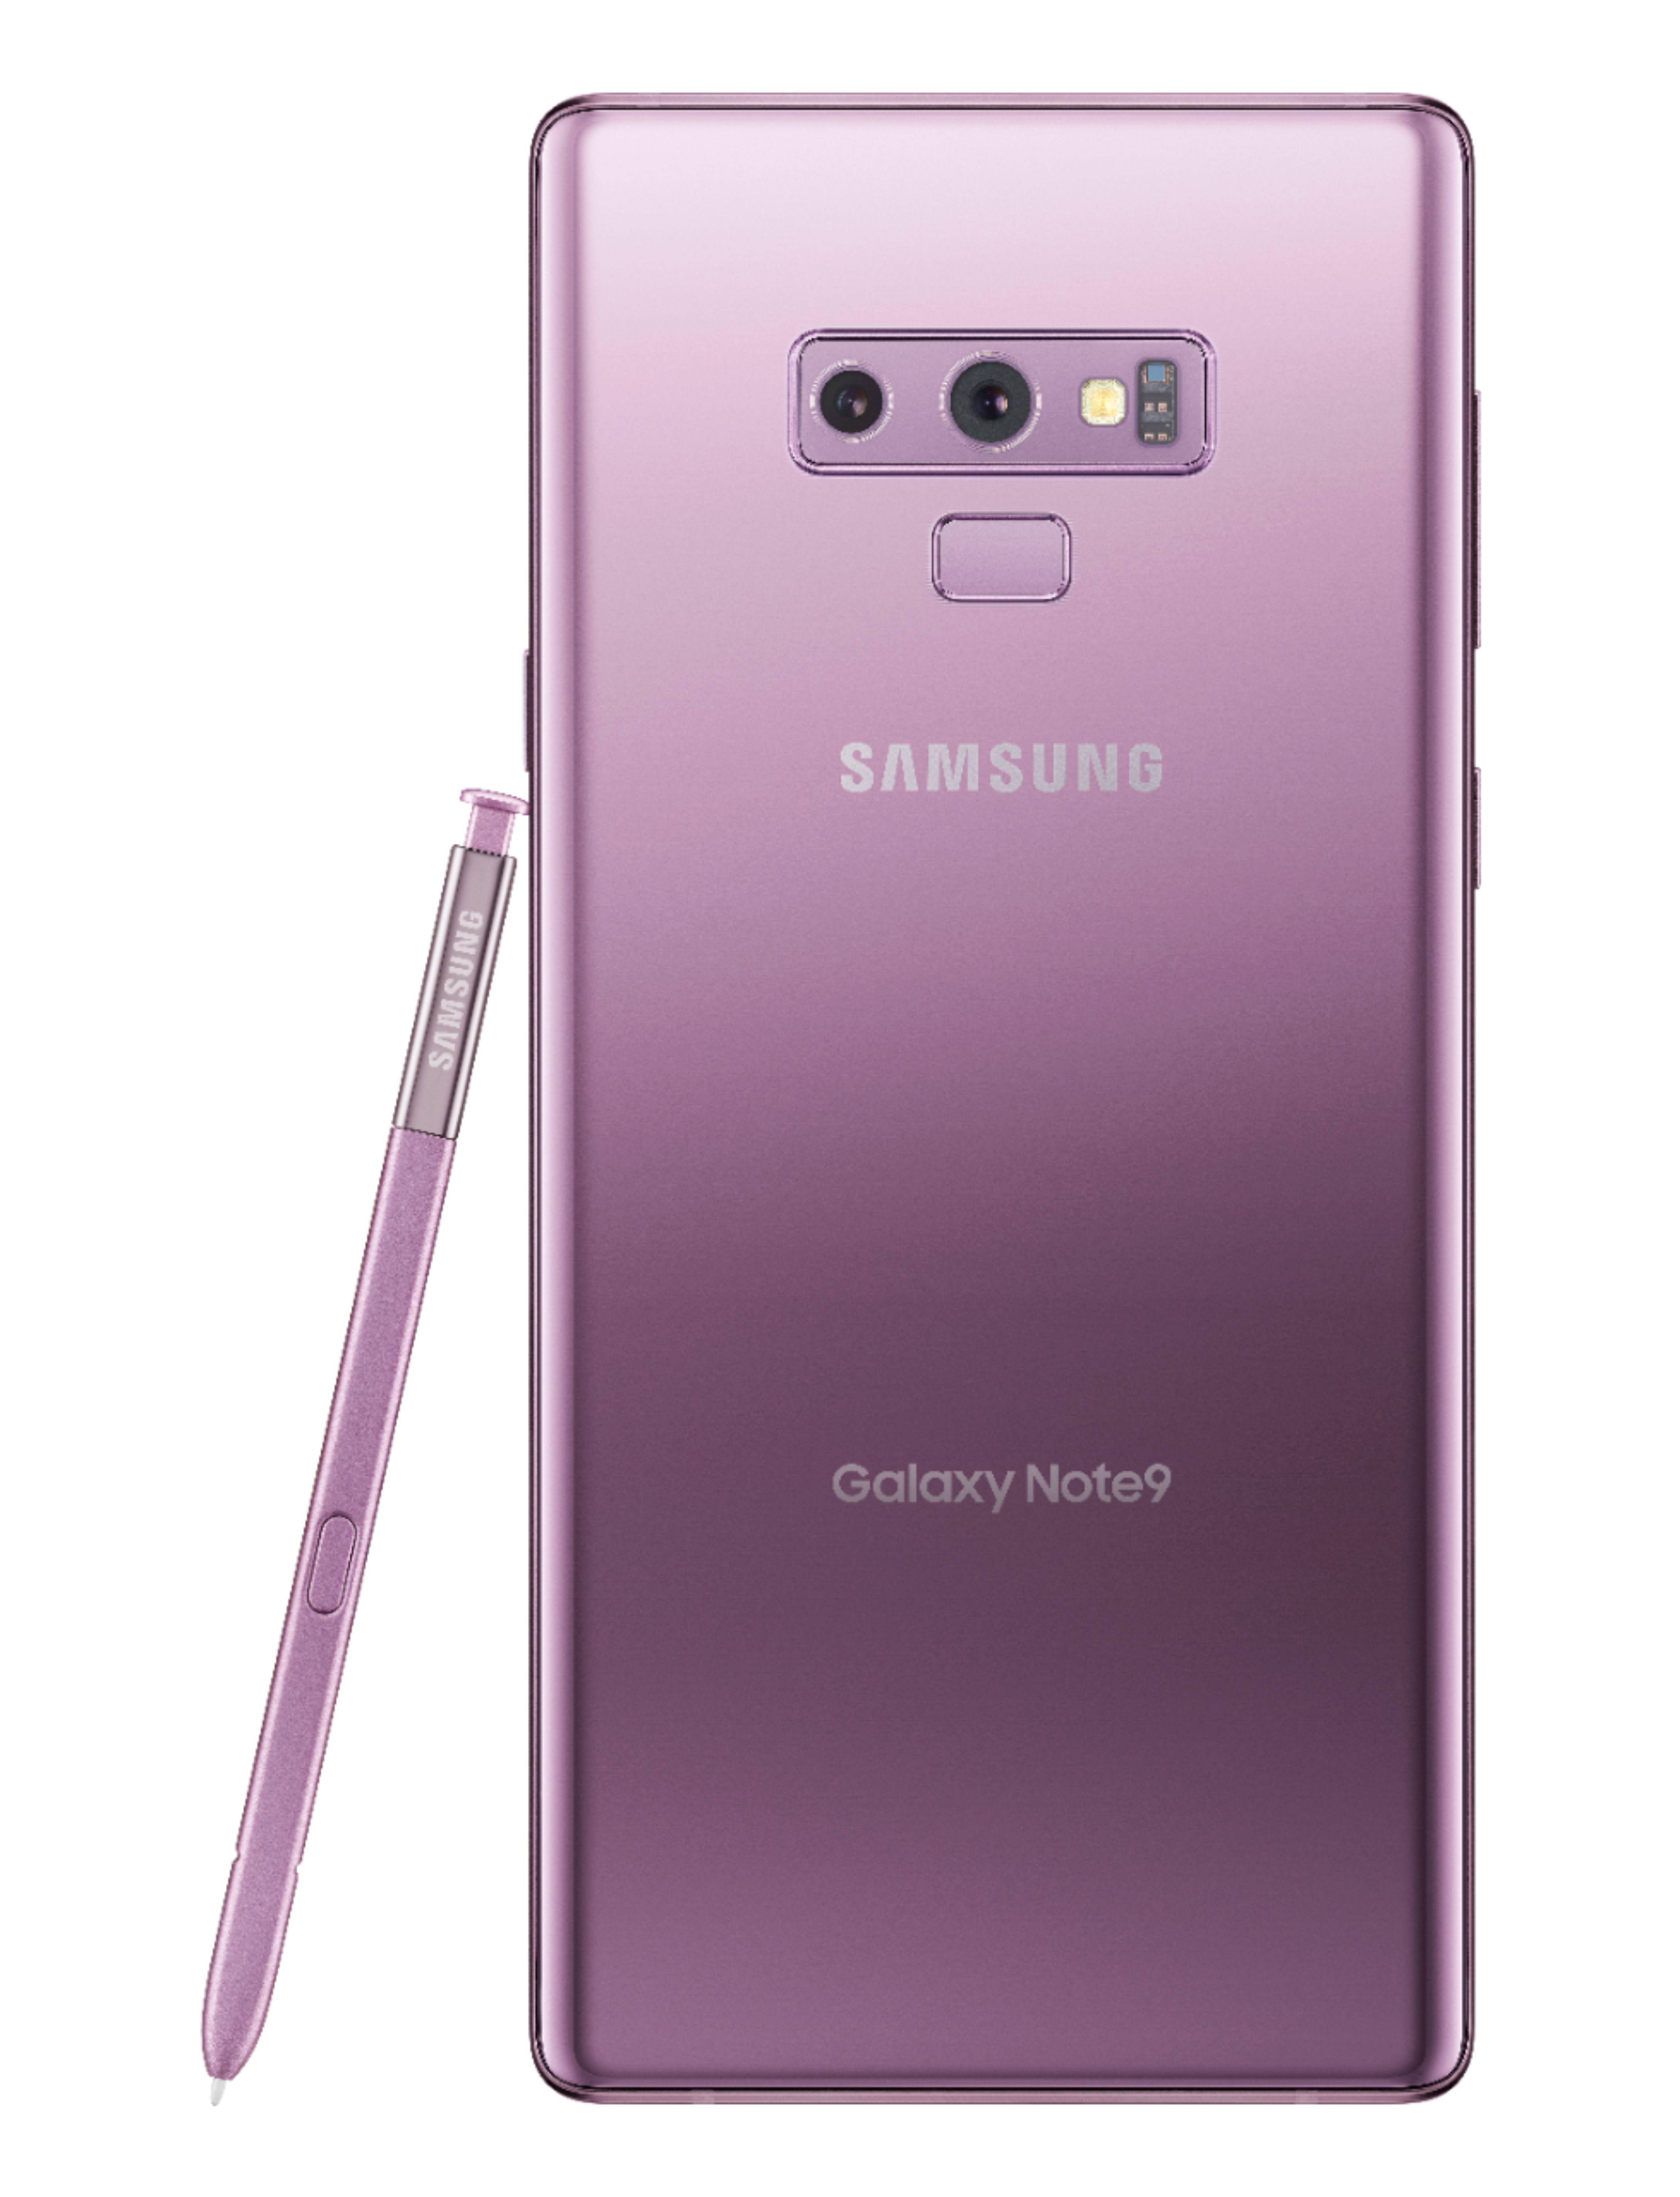 Back View: Samsung - Geek Squad Certified Refurbished Galaxy Note9 128GB - Lavender Purple (Verizon)